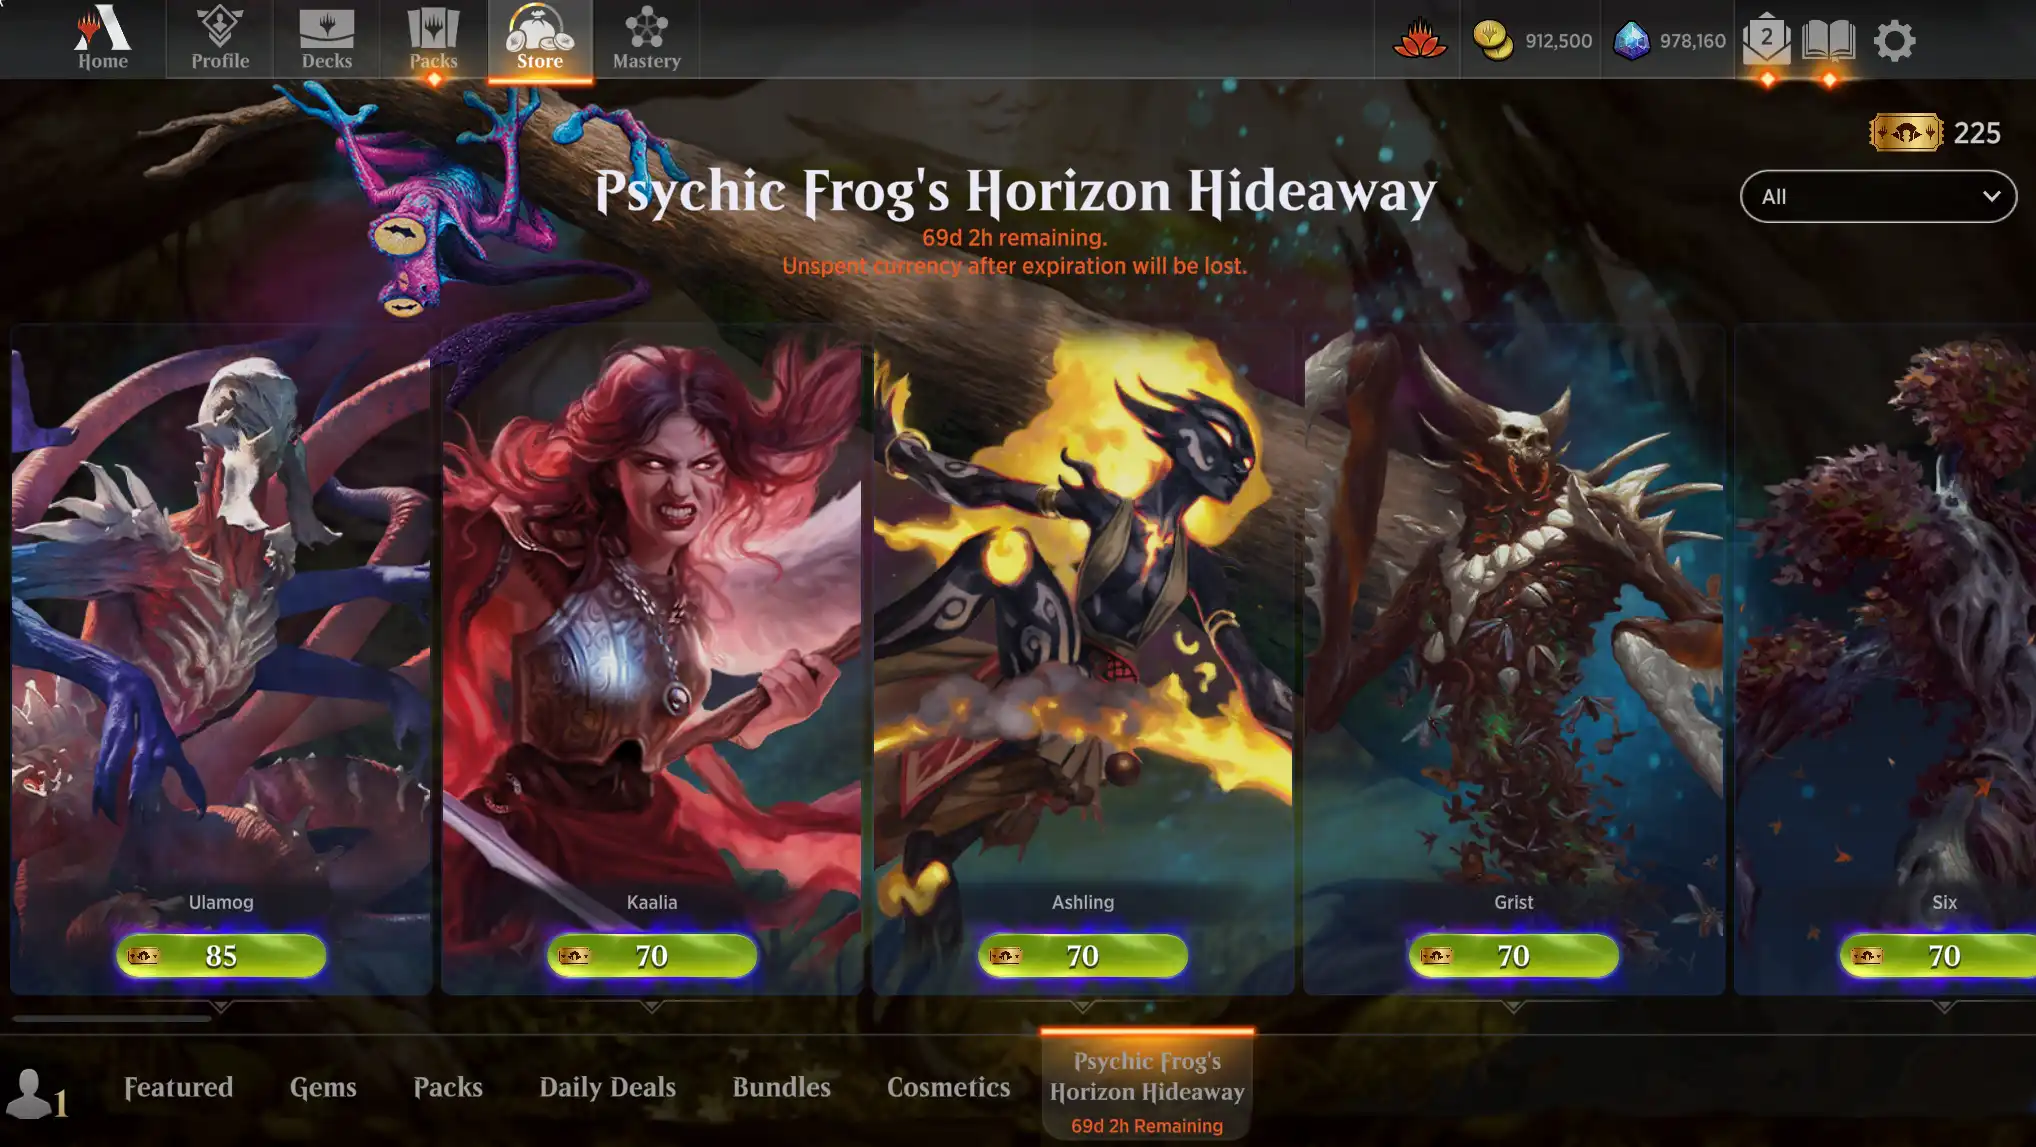 Screenshot of the unlocked Psychic Frog's Horizon Hideaway MTG Arena Store tab with avatars shown of Ulamog, Kaalia, Ashling, Grist, and Six